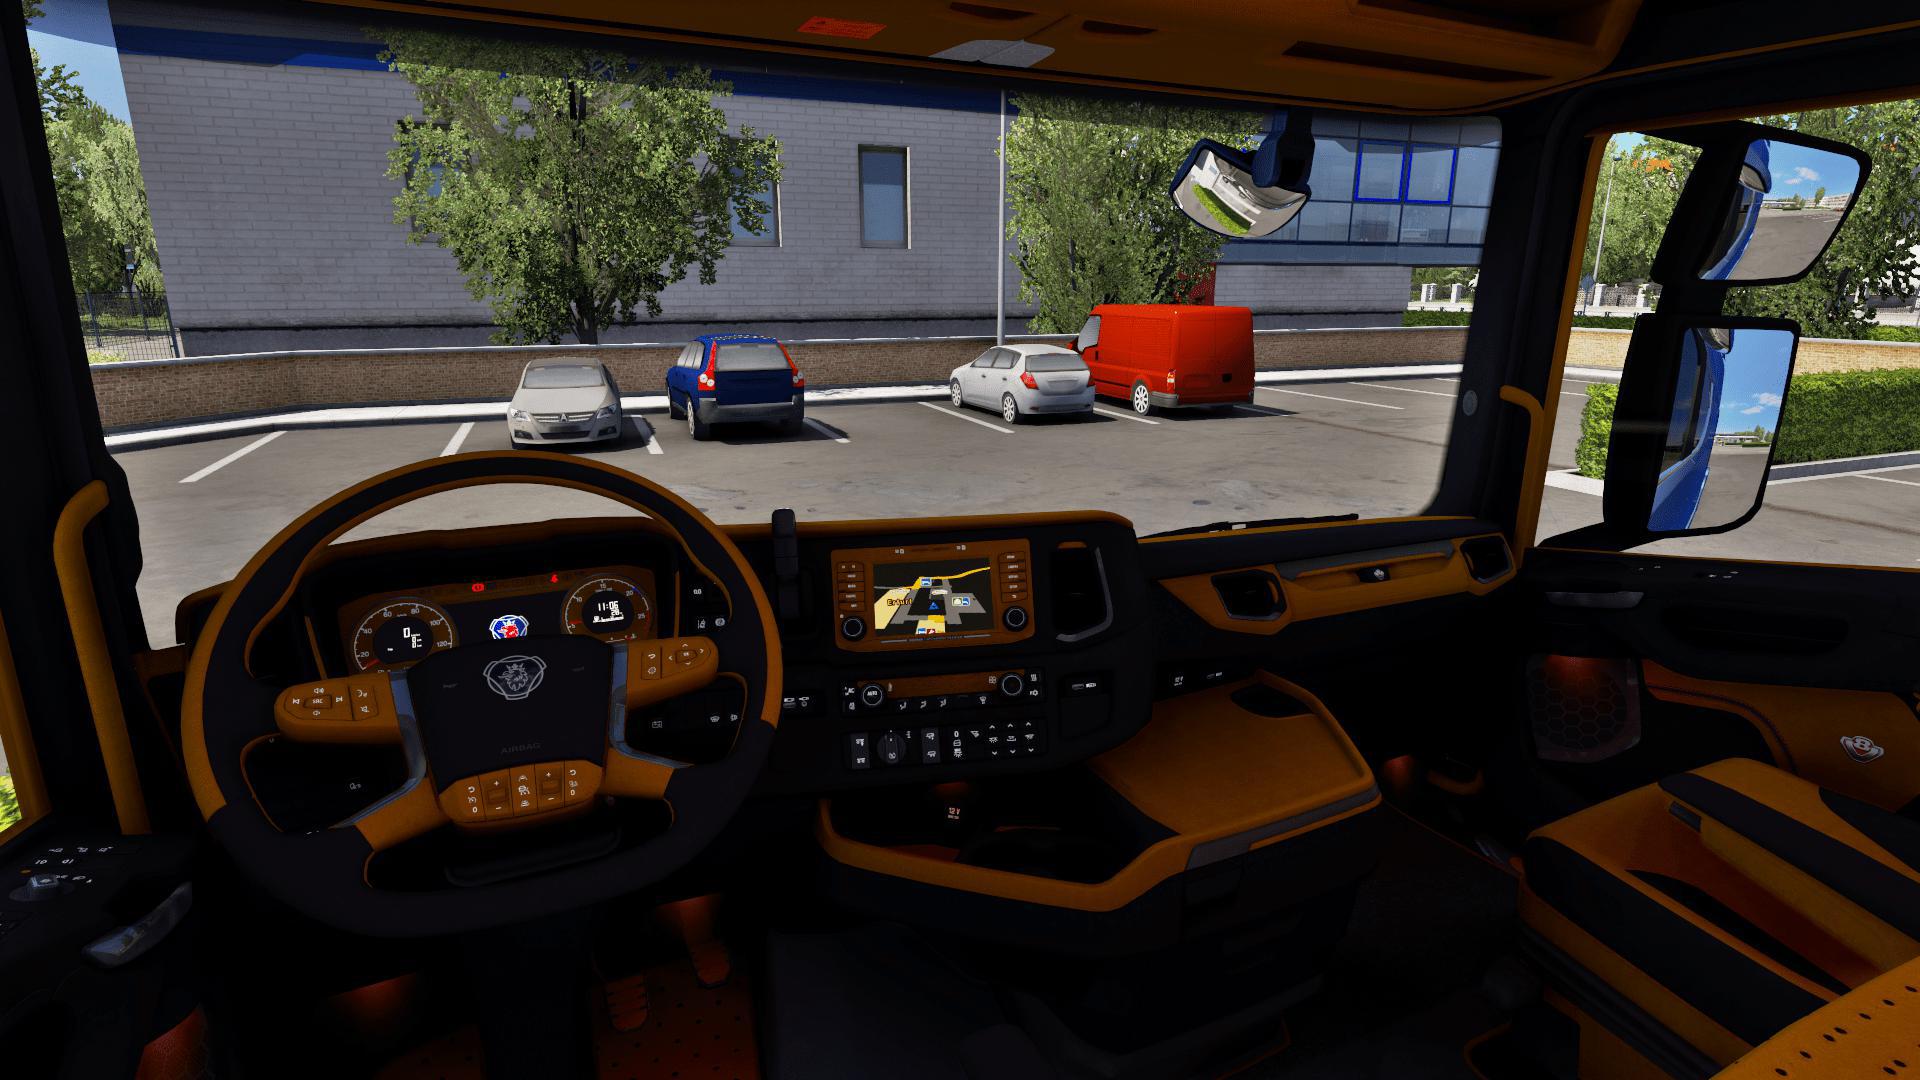 ETS2 Interiors, Euro truck simulator 2 Interiors mods - Page 38 of 76 